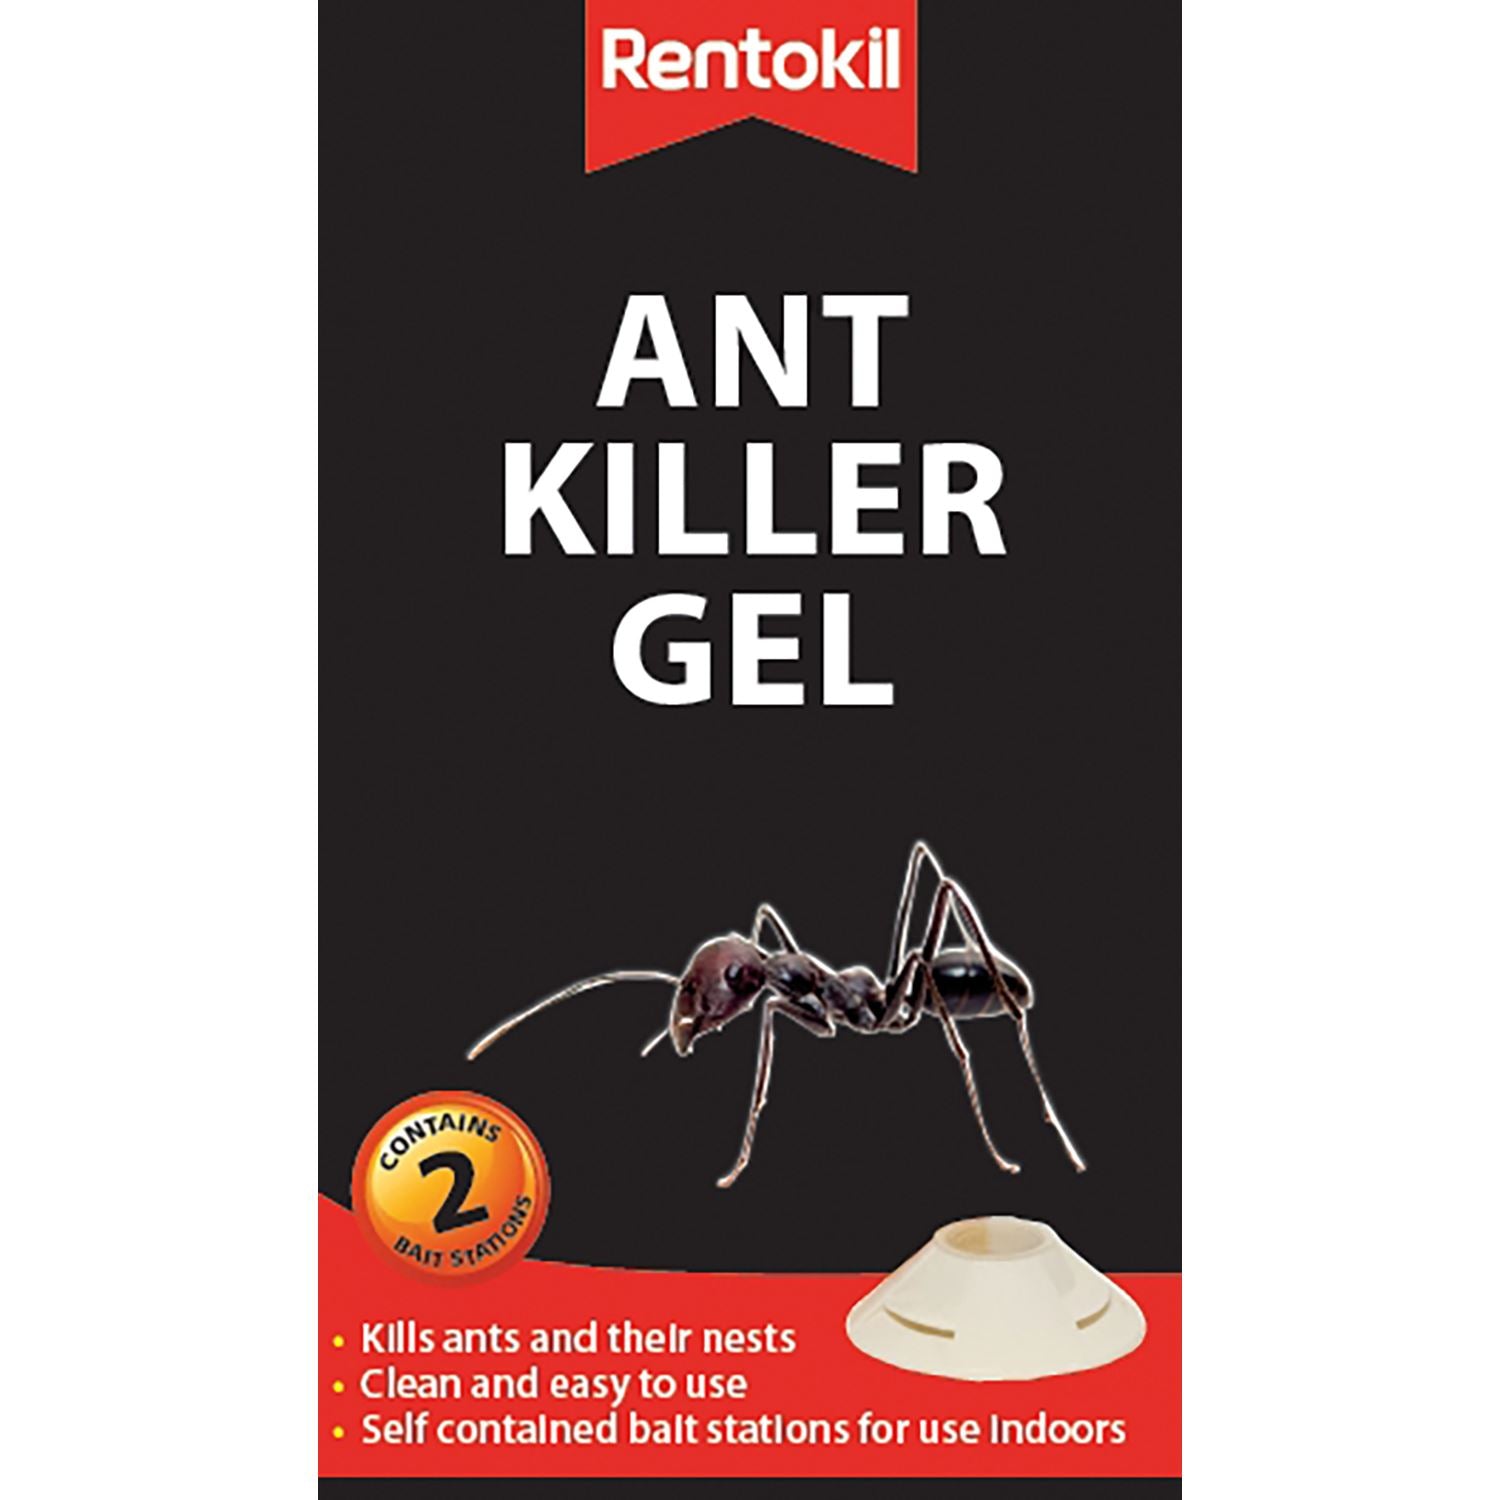 Rentokil Ant Killer Gel Bait Station - Just Horse Riders